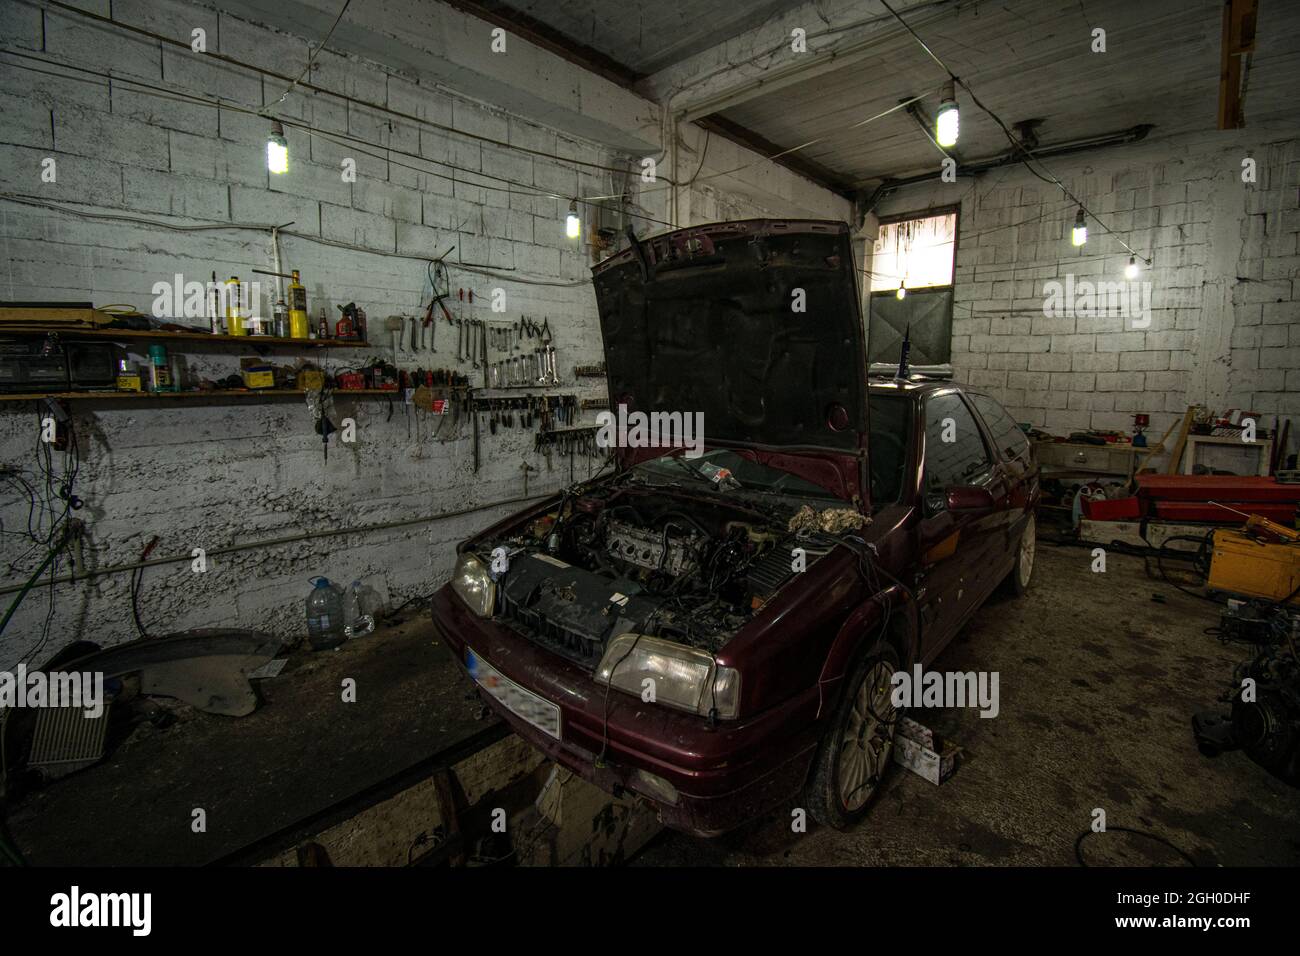 Inside the real car repair shop Stock Photo